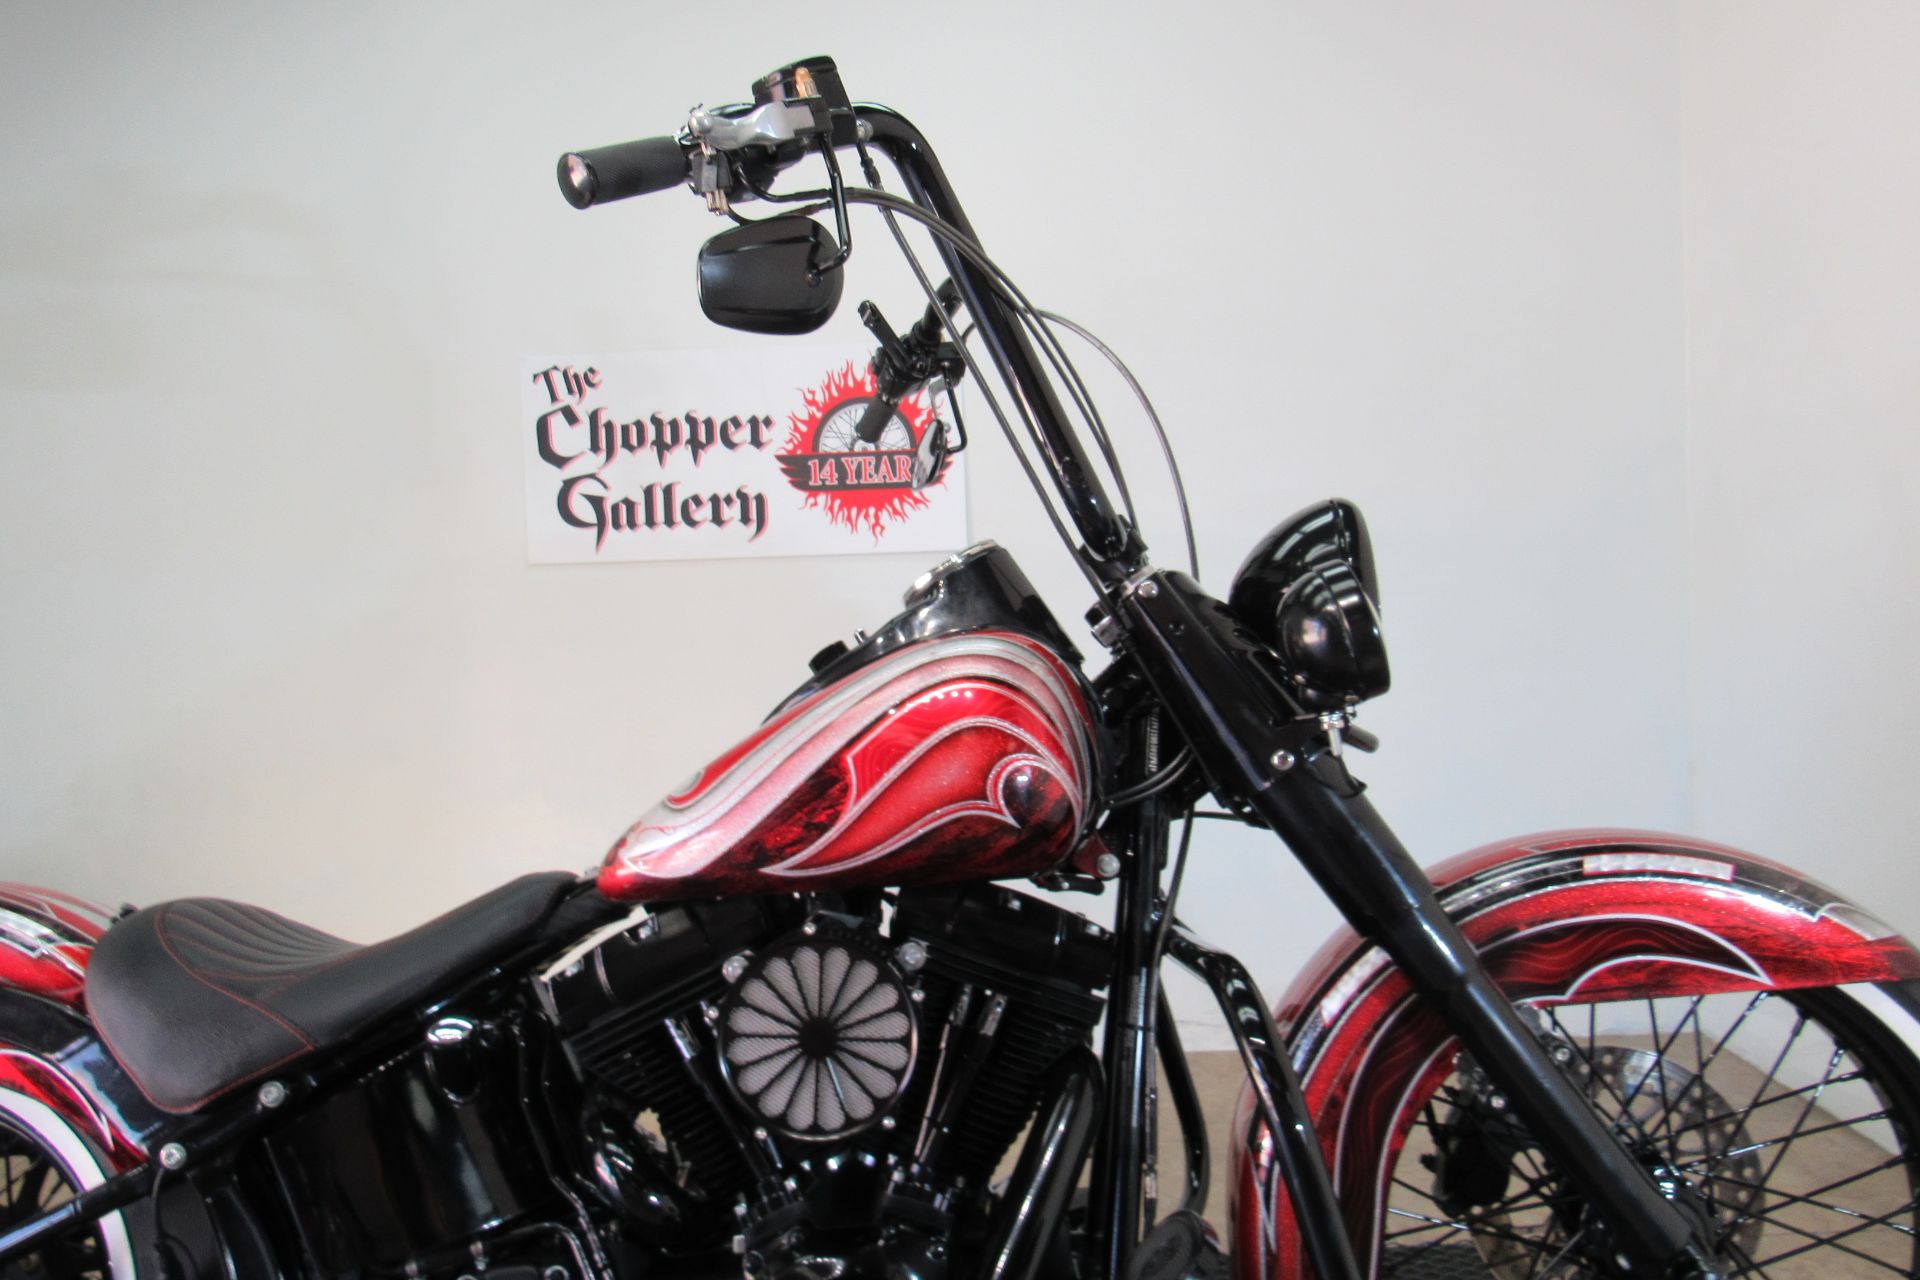 2013 Harley-Davidson Softail Slim® in Temecula, California - Photo 9